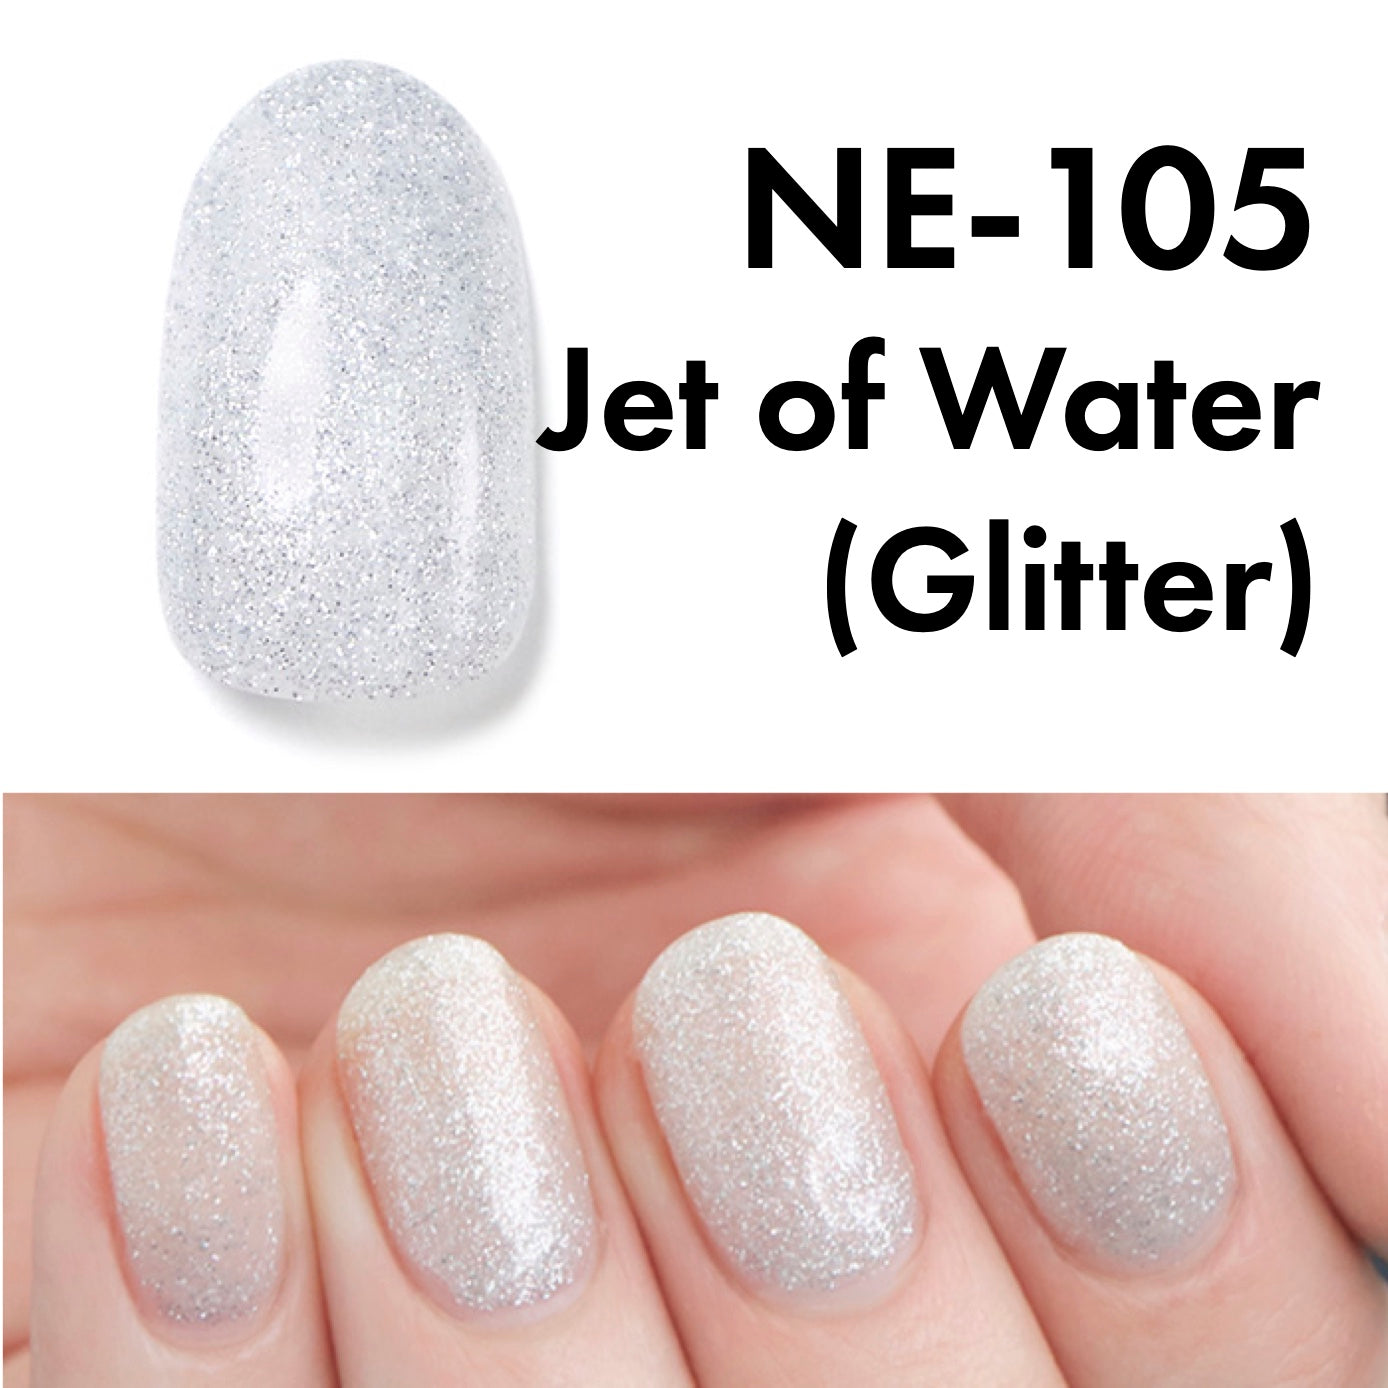 Gel Polish NE-105 "Jet of Water"